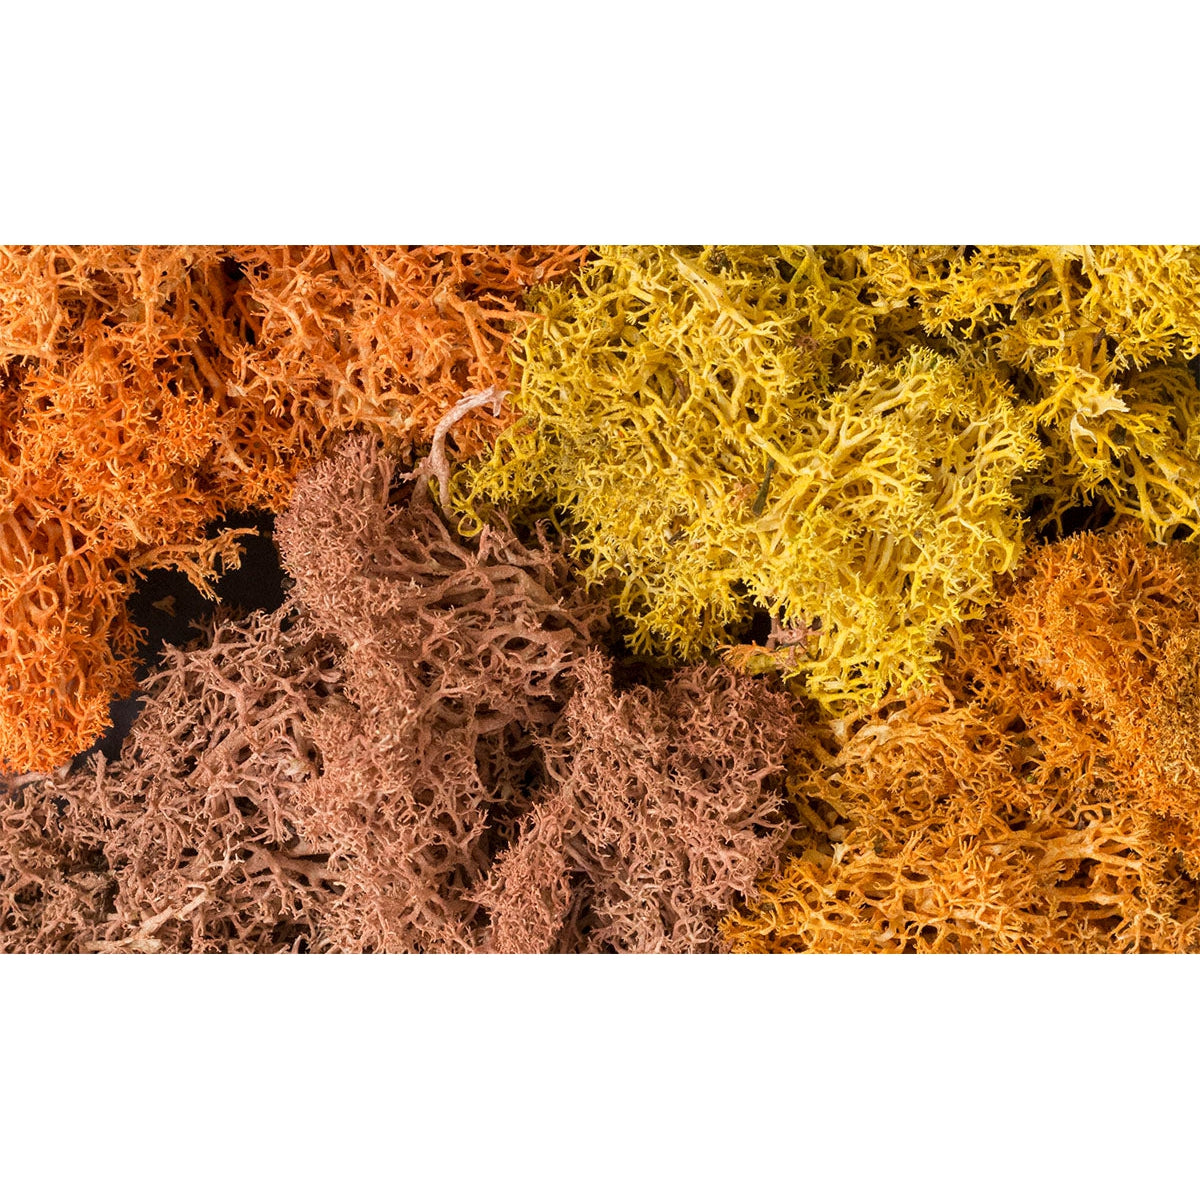 Woodland Scenics Lichen/Autumn Mix